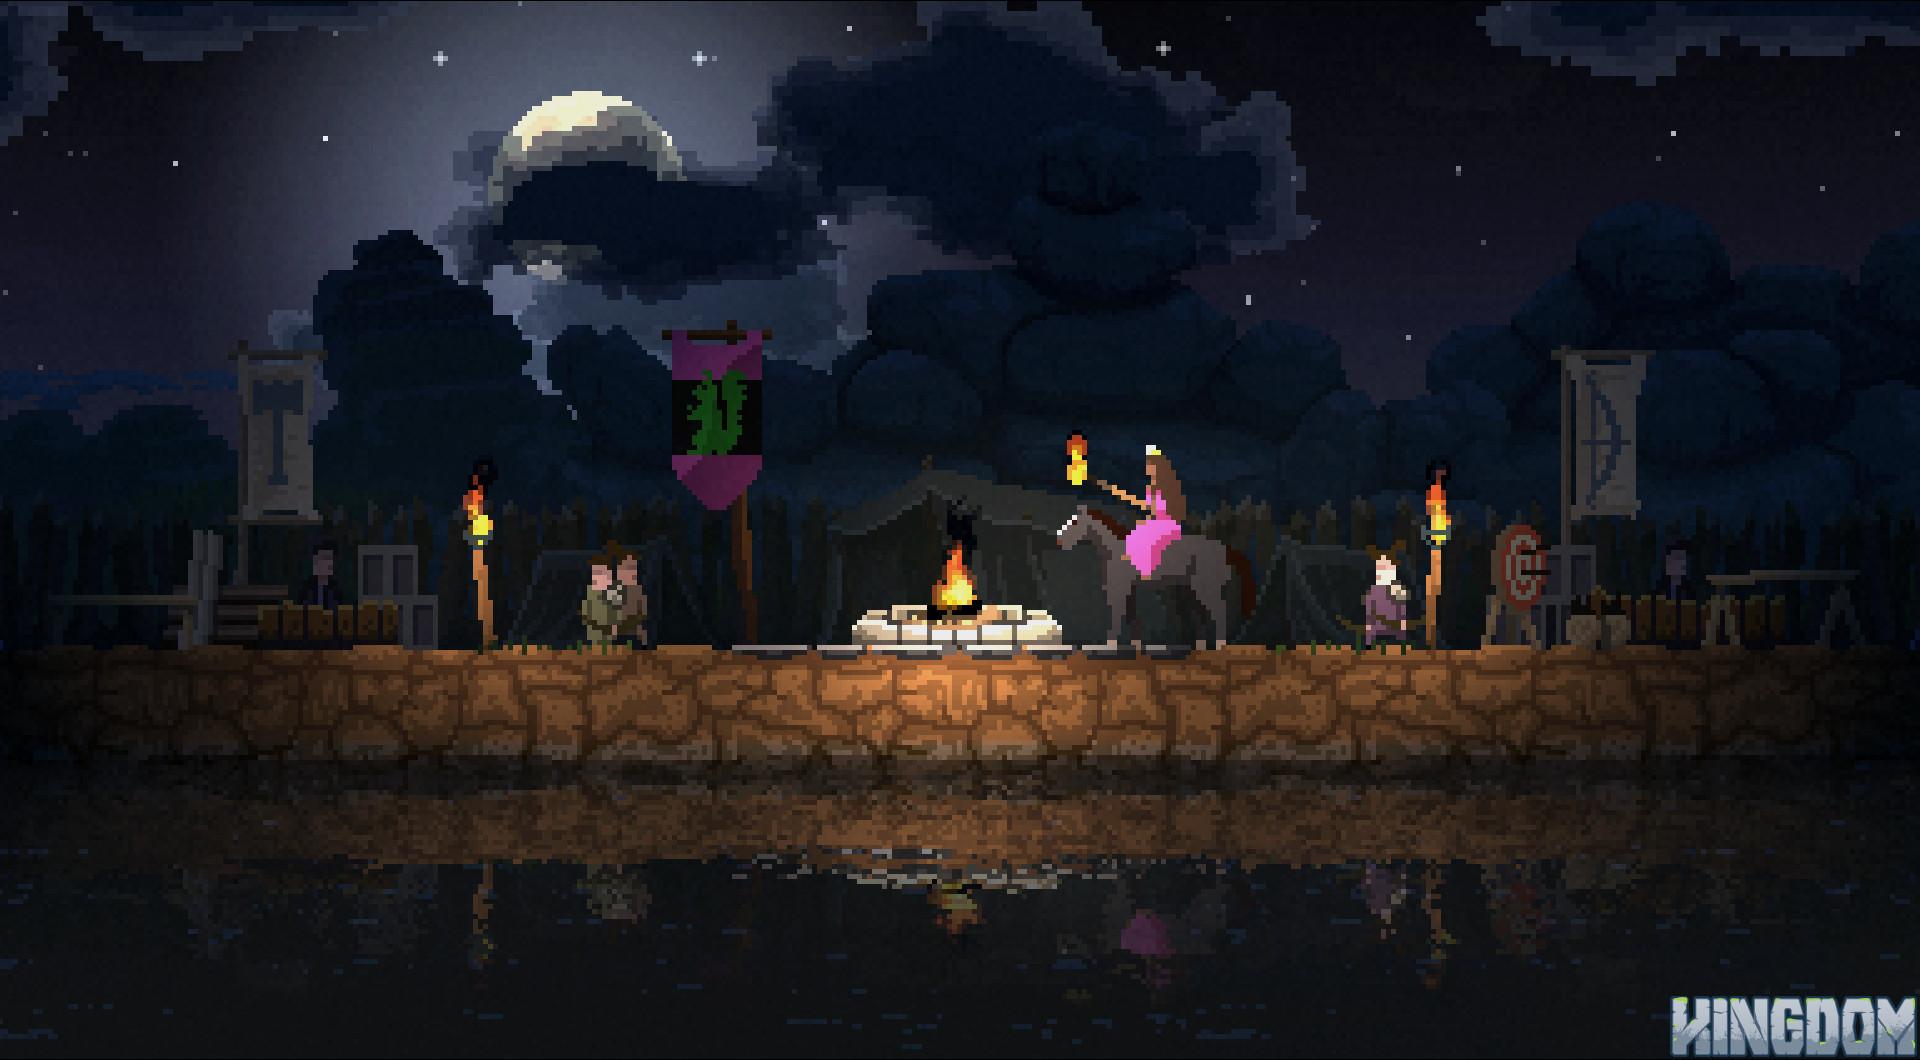 Screenshot №4 from game Kingdom: Classic